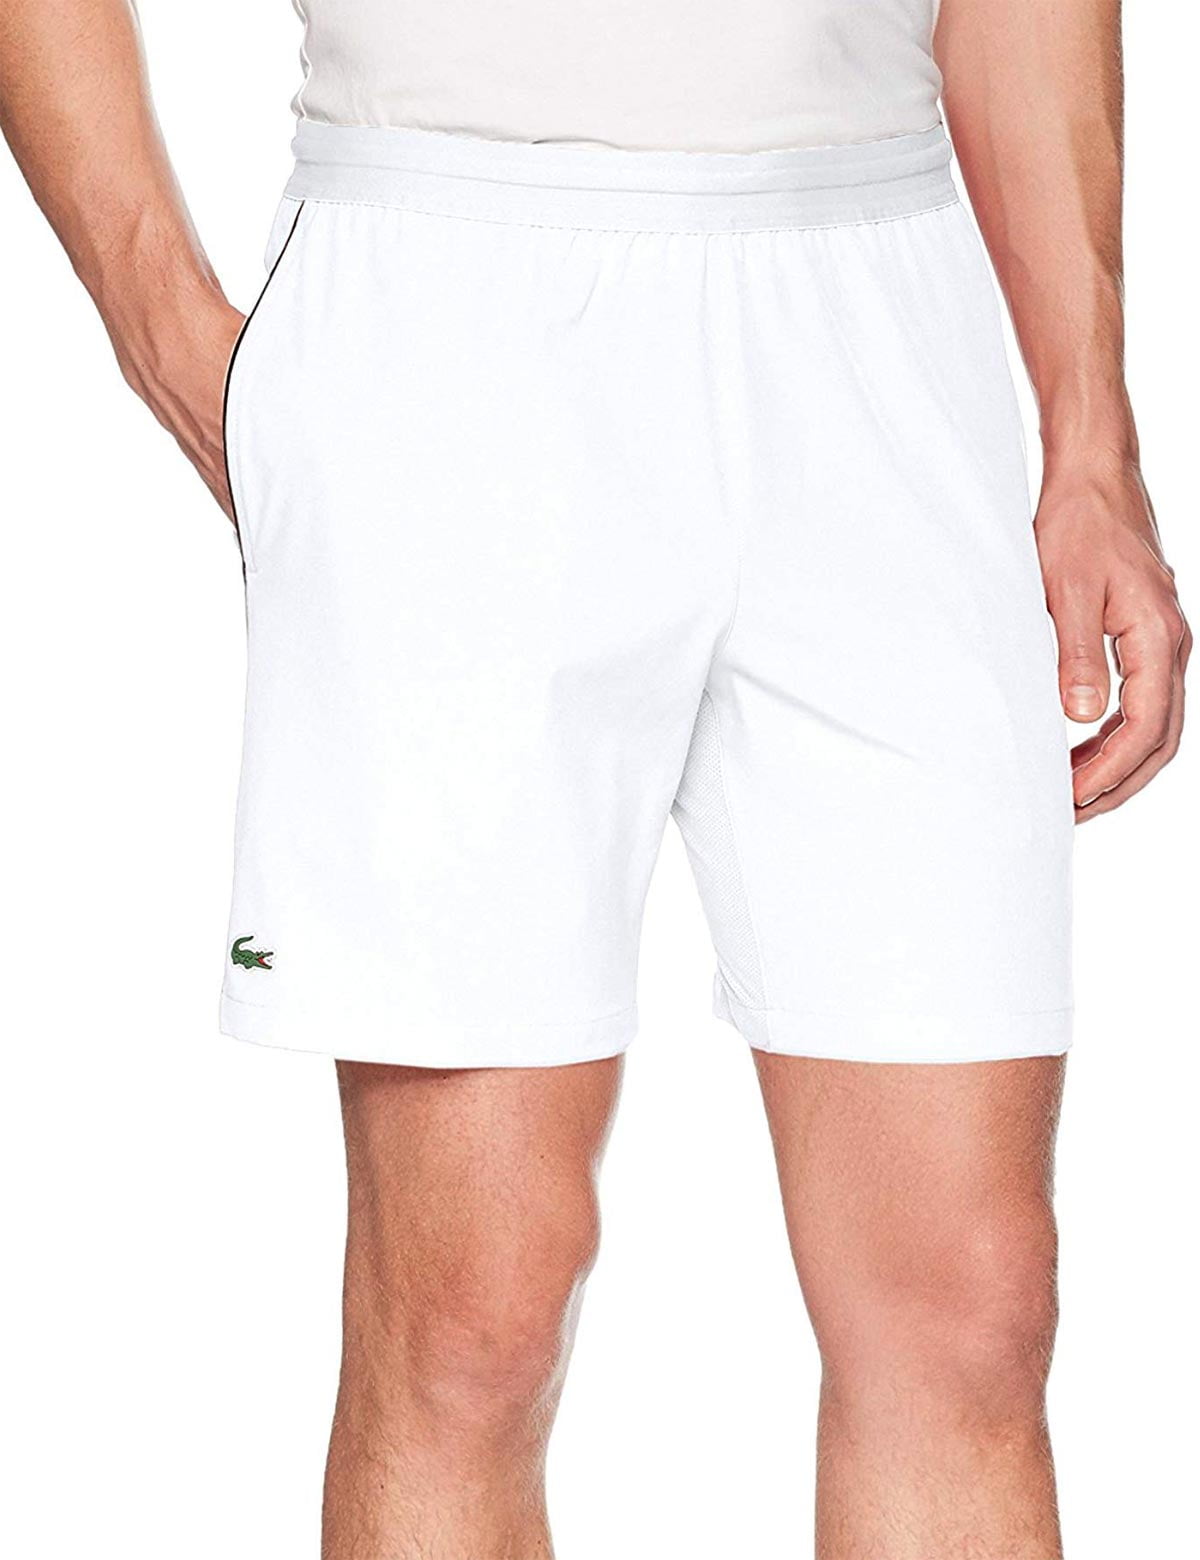 lacoste tennis shorts mens